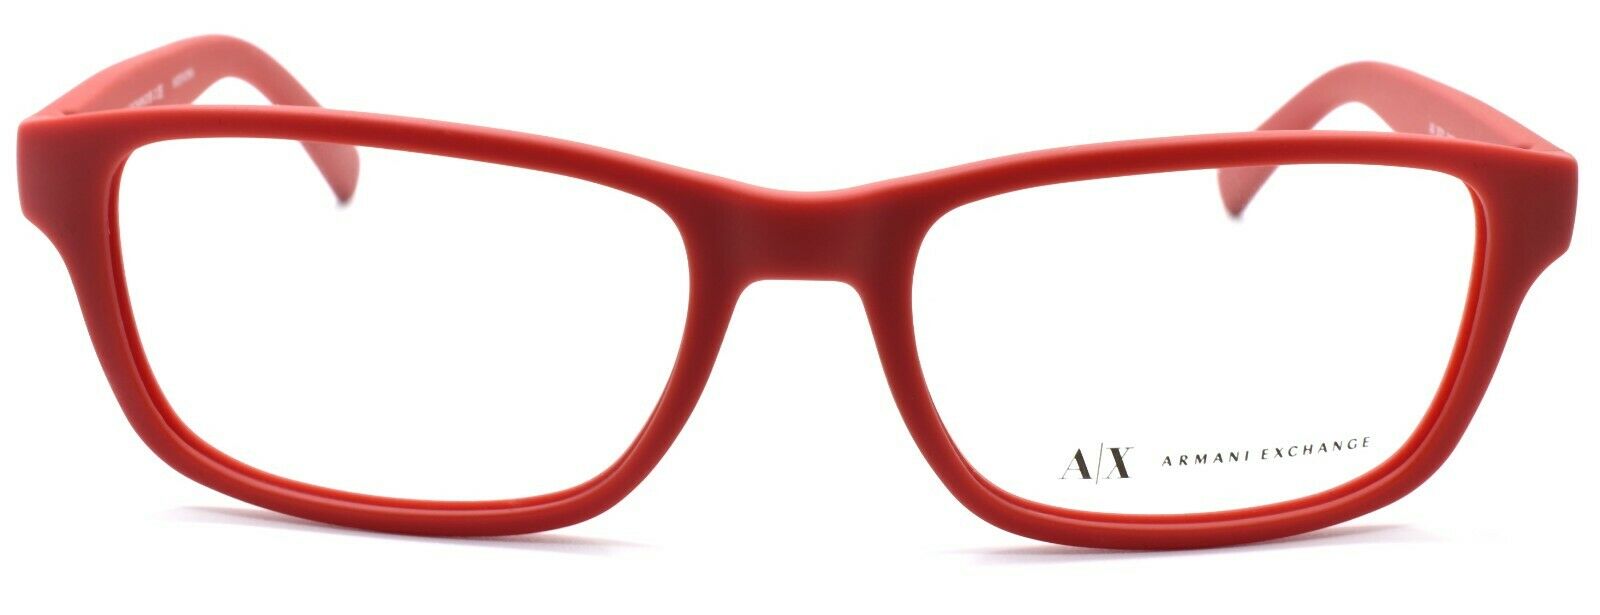 2-Armani Exchange AX3021 8155 Eyeglasses Frames 54-17-140 Matte Red-8053672409963-IKSpecs